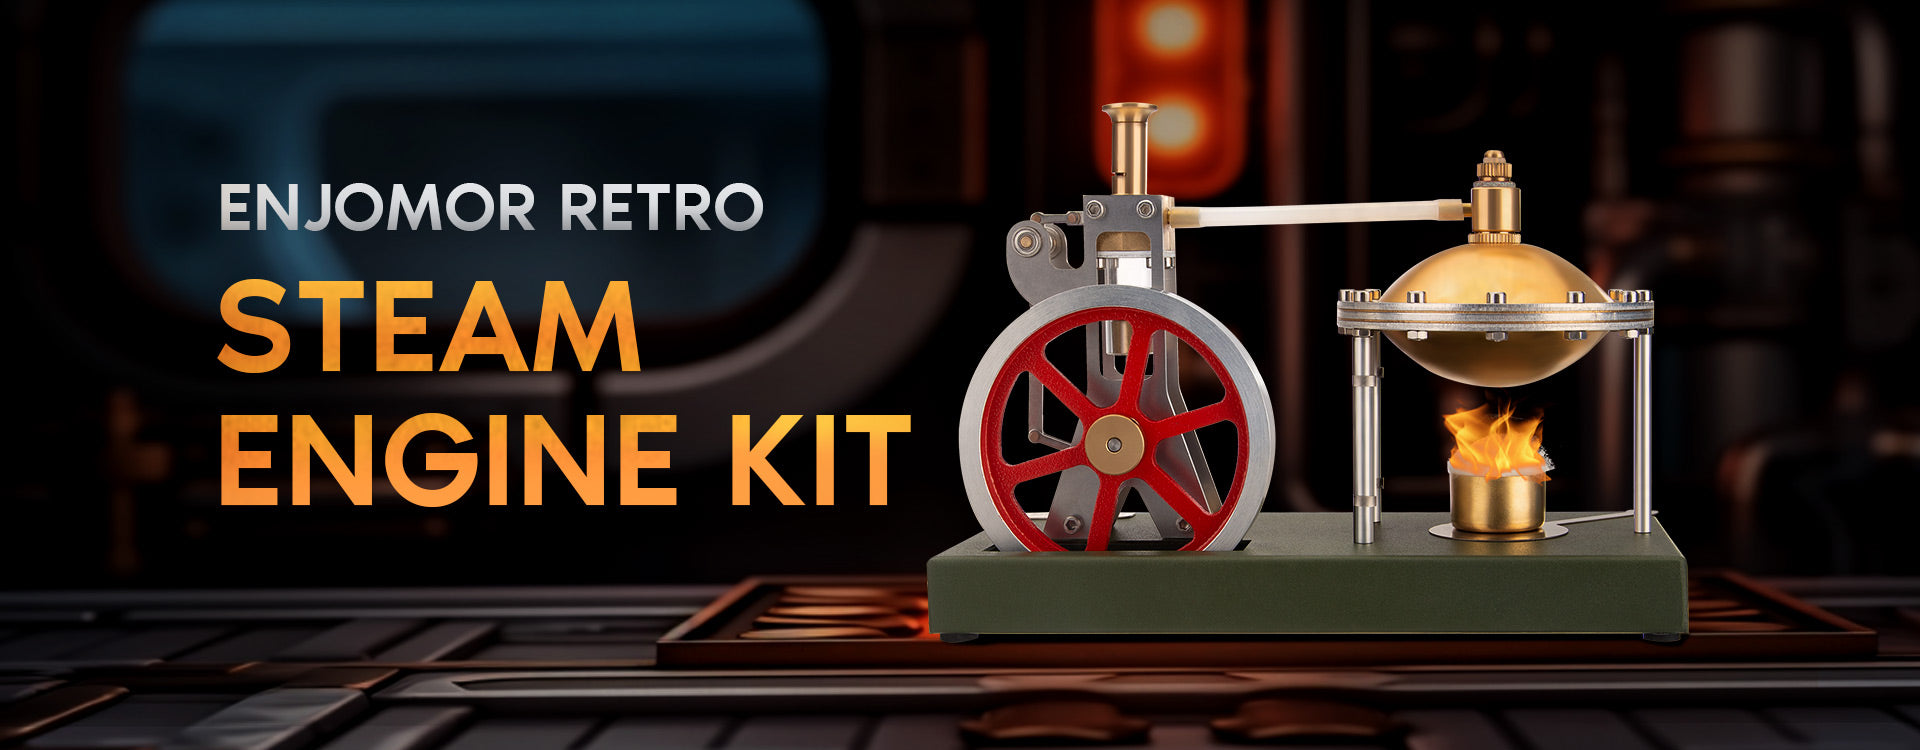 ENJOMOR Retro Steam Engine Kit